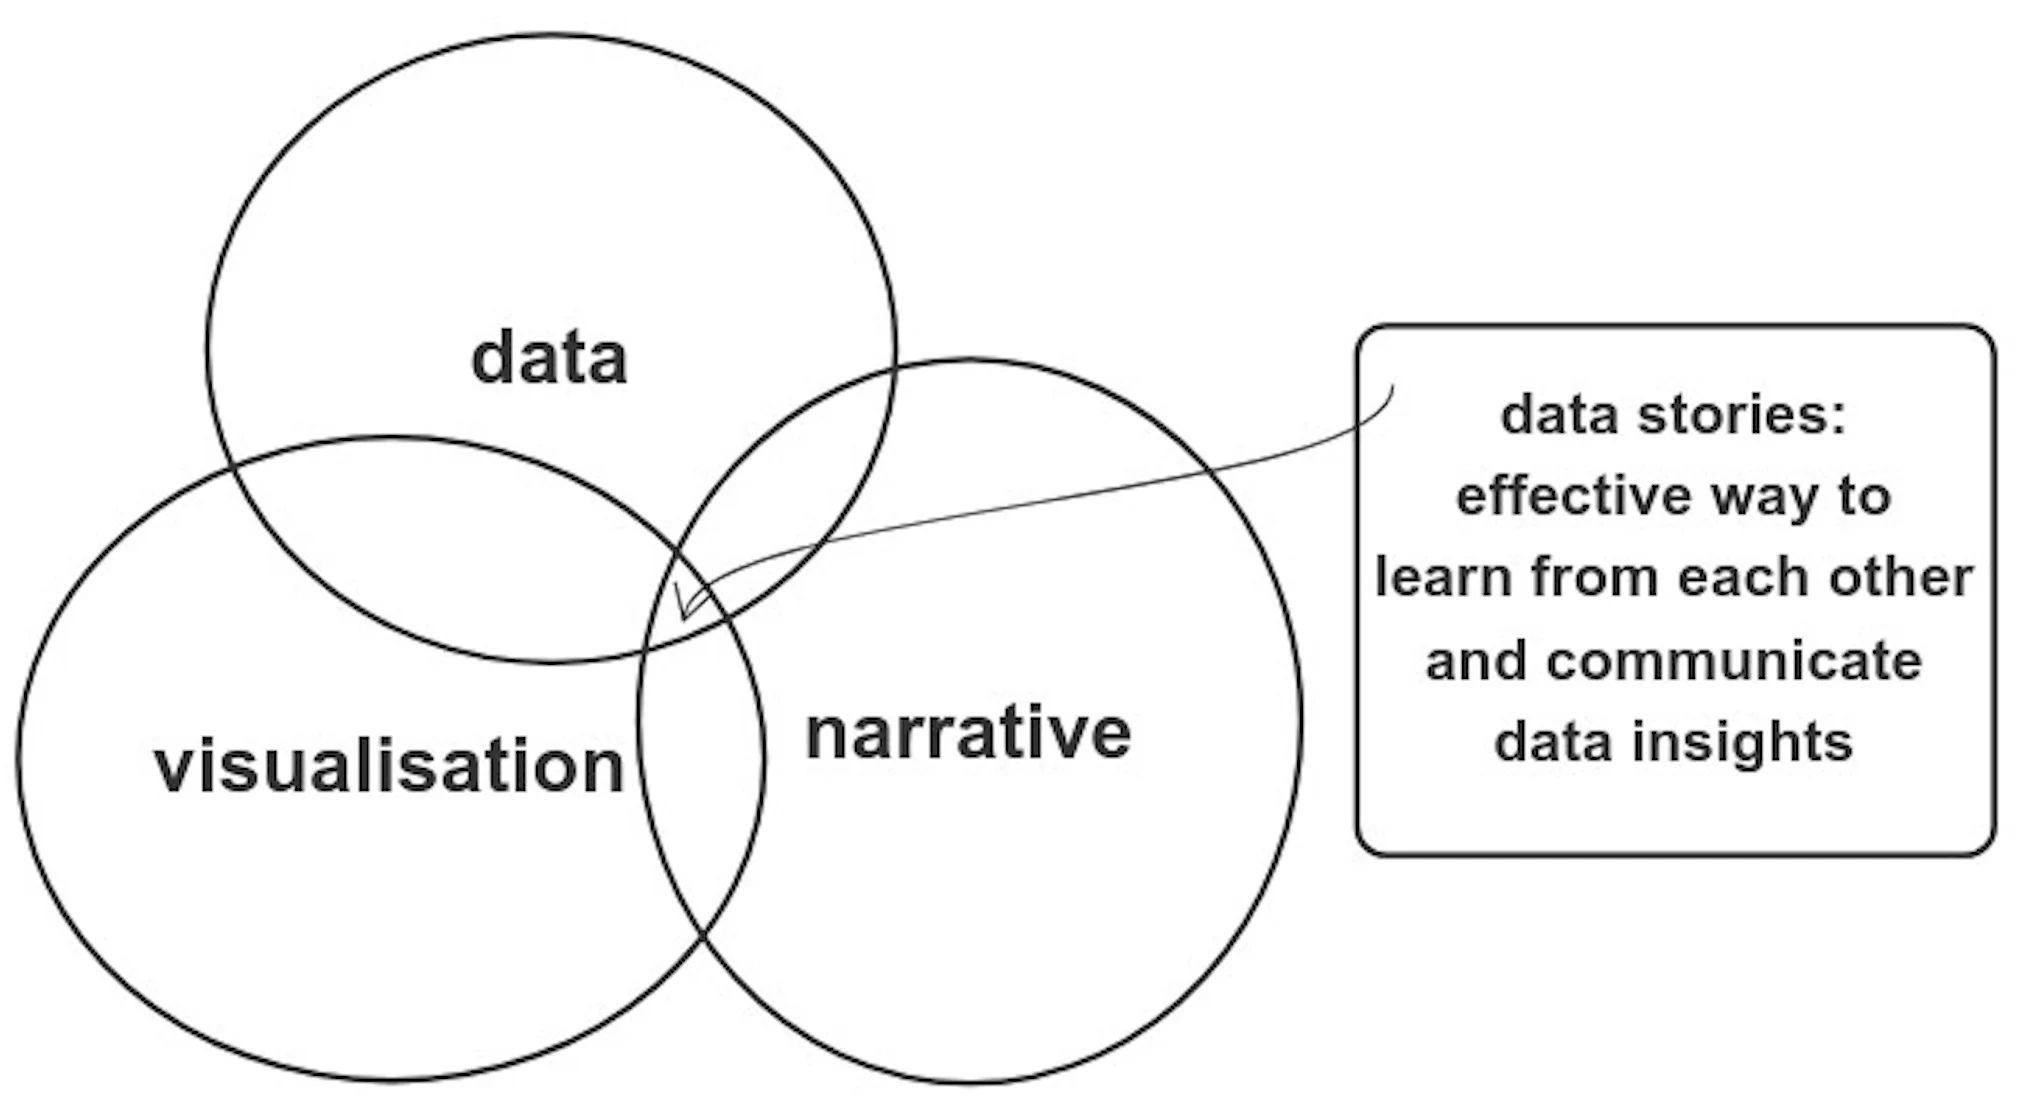 3 fundamentals of data storytelling: data, visualisation and narrative